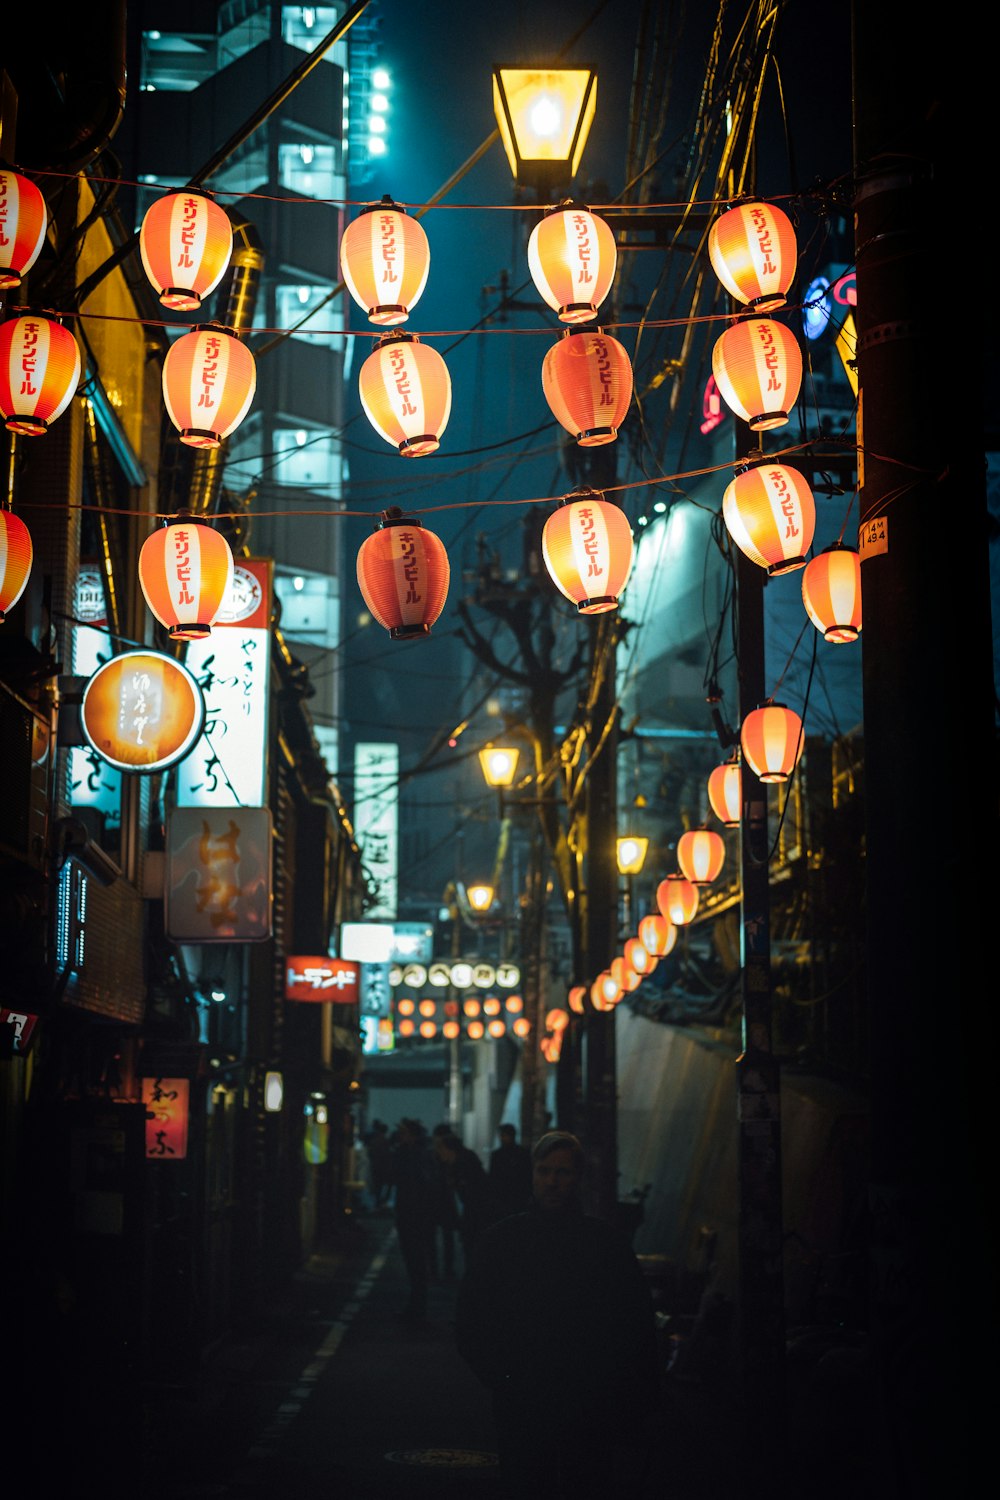 people walking pass under lighted lanterns